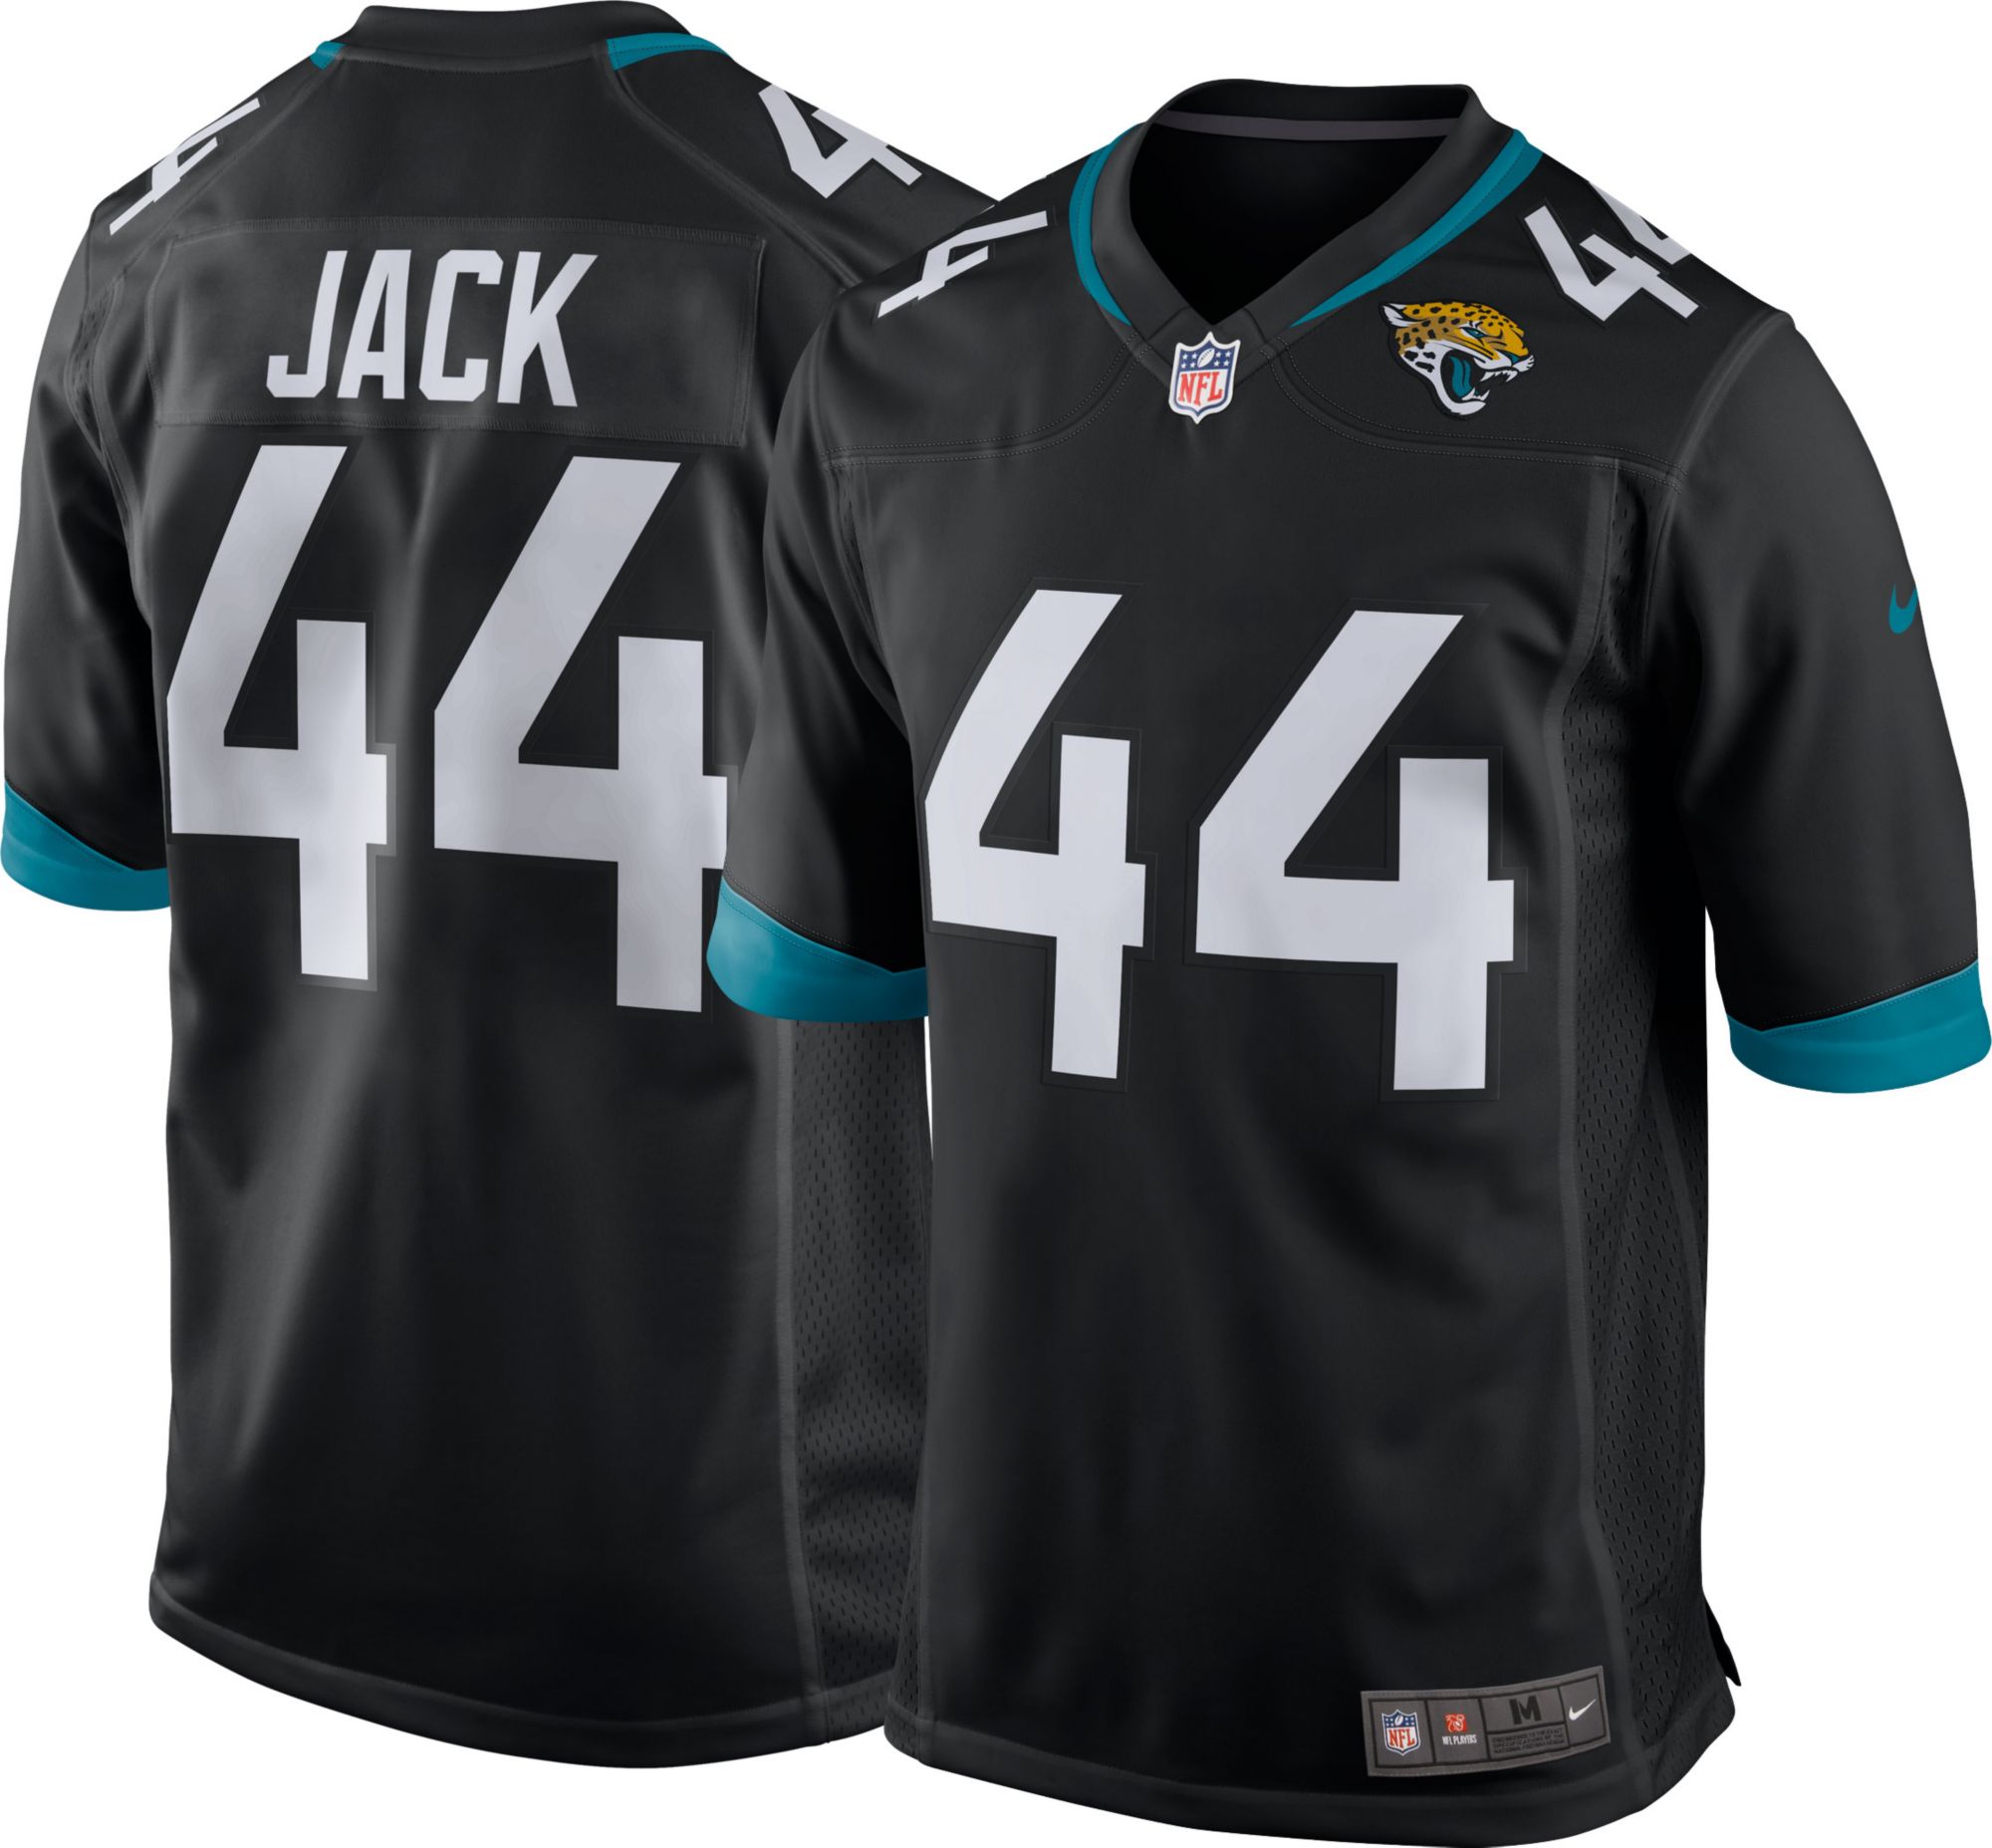 jacksonville jaguars jersey